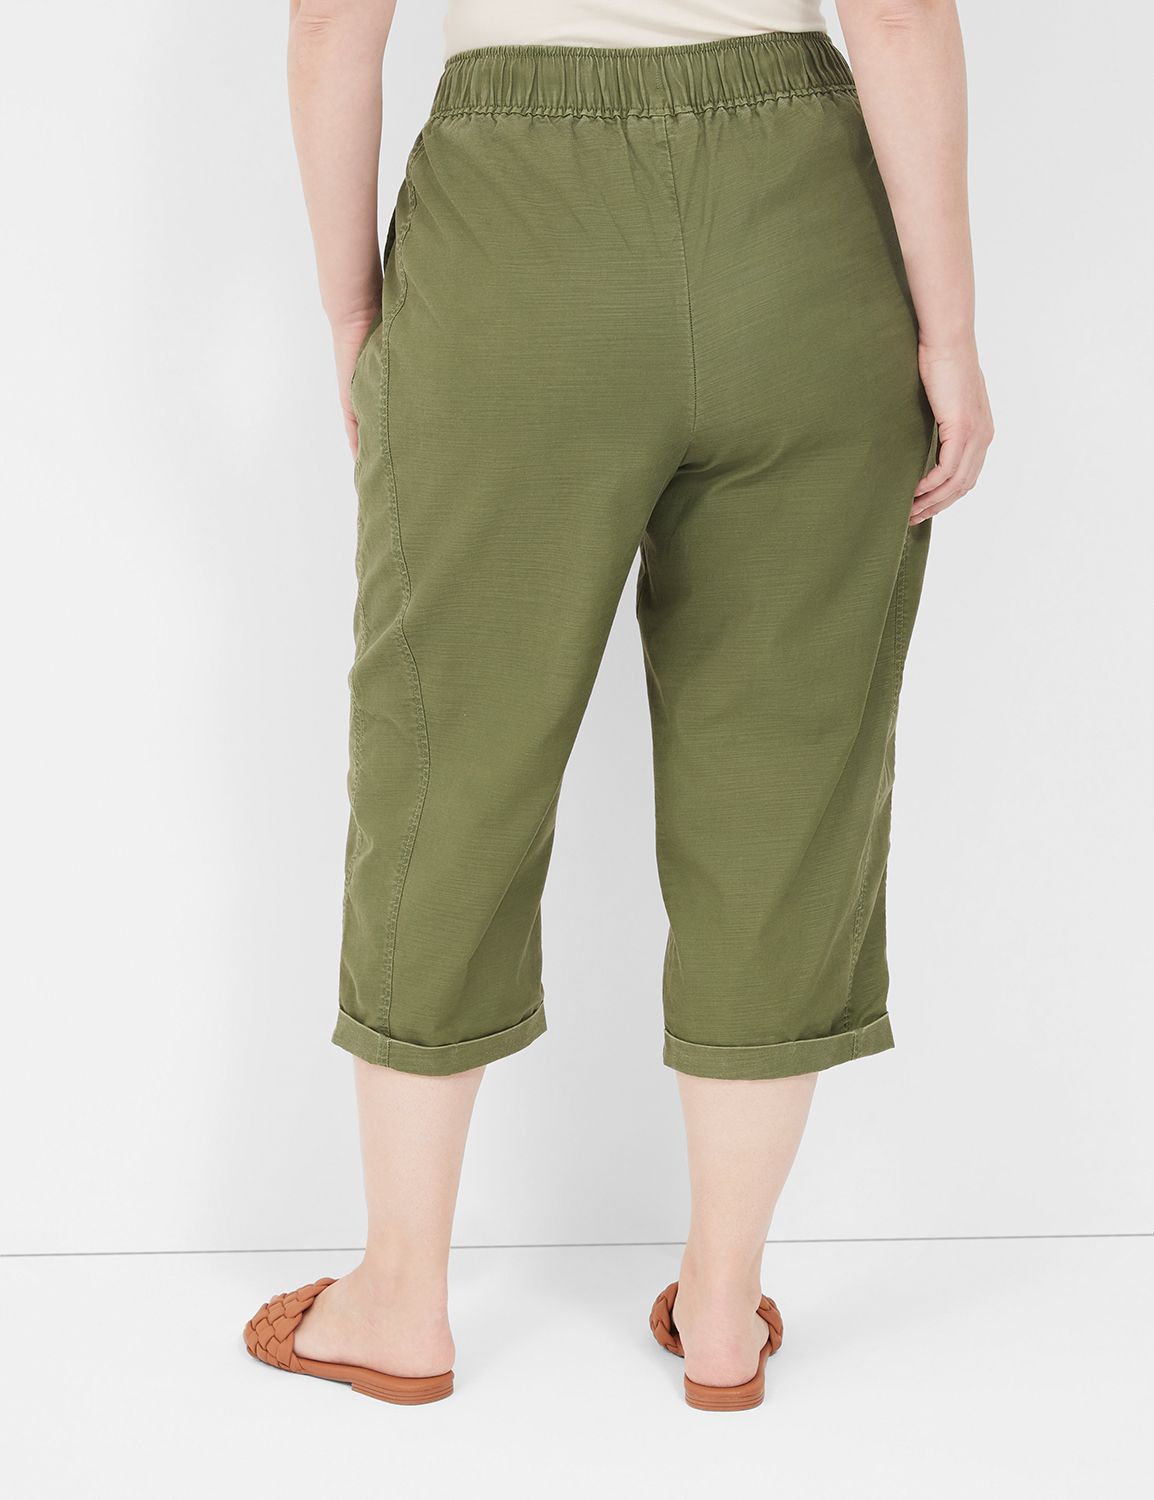 HDE Pull On Capri Pants For Women with Pockets Elastic Waist